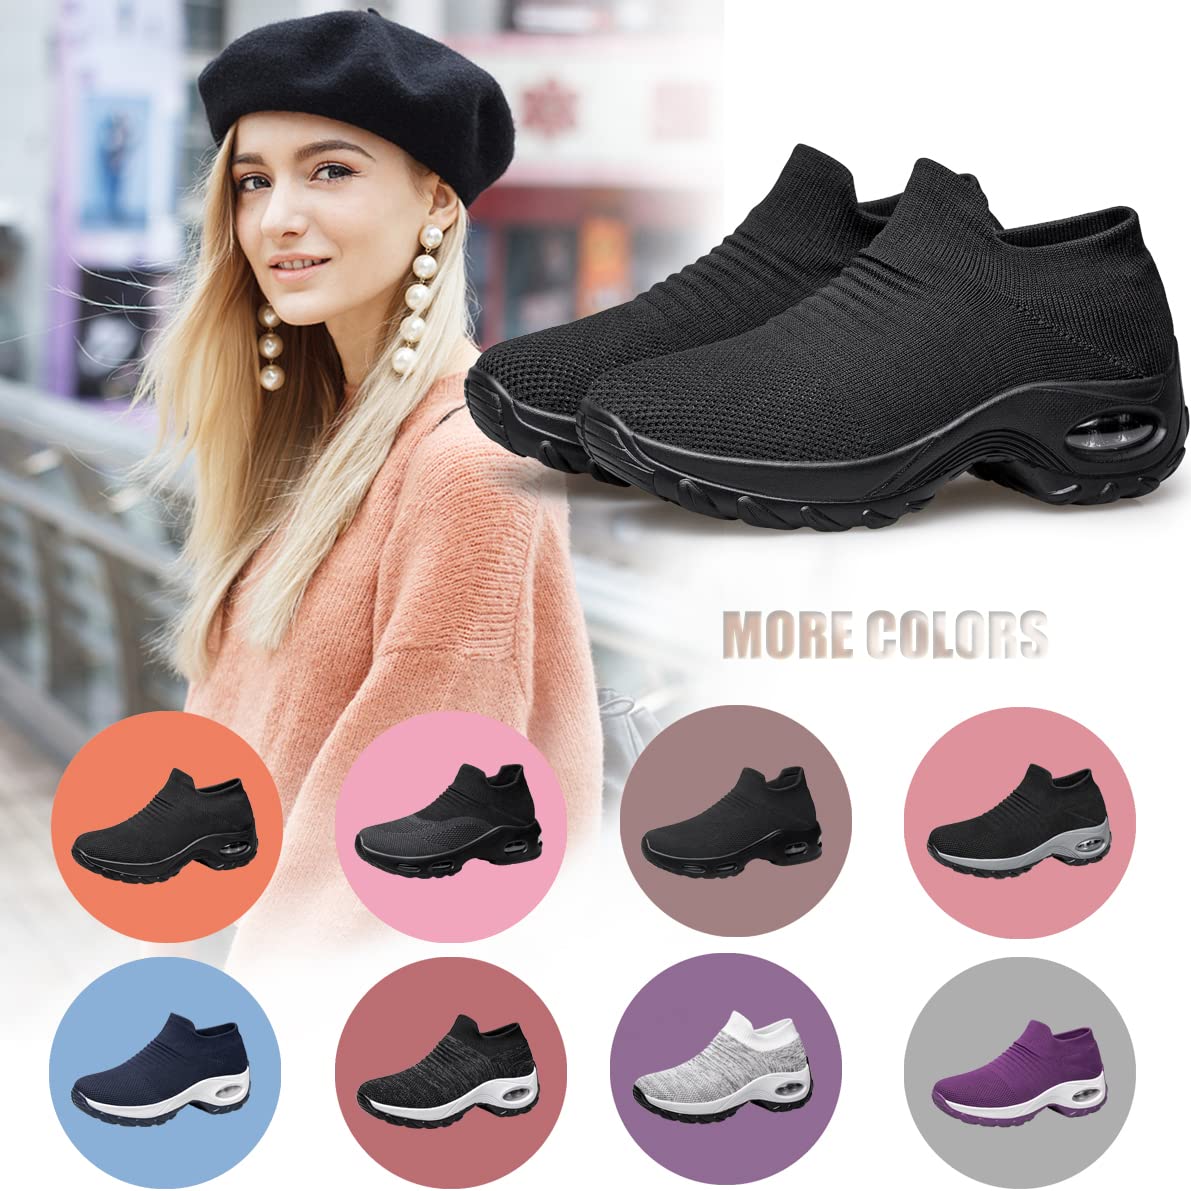 YHOON Women's Fashion Sneakers Walking Shoes Work Shoes Black Size 8.5